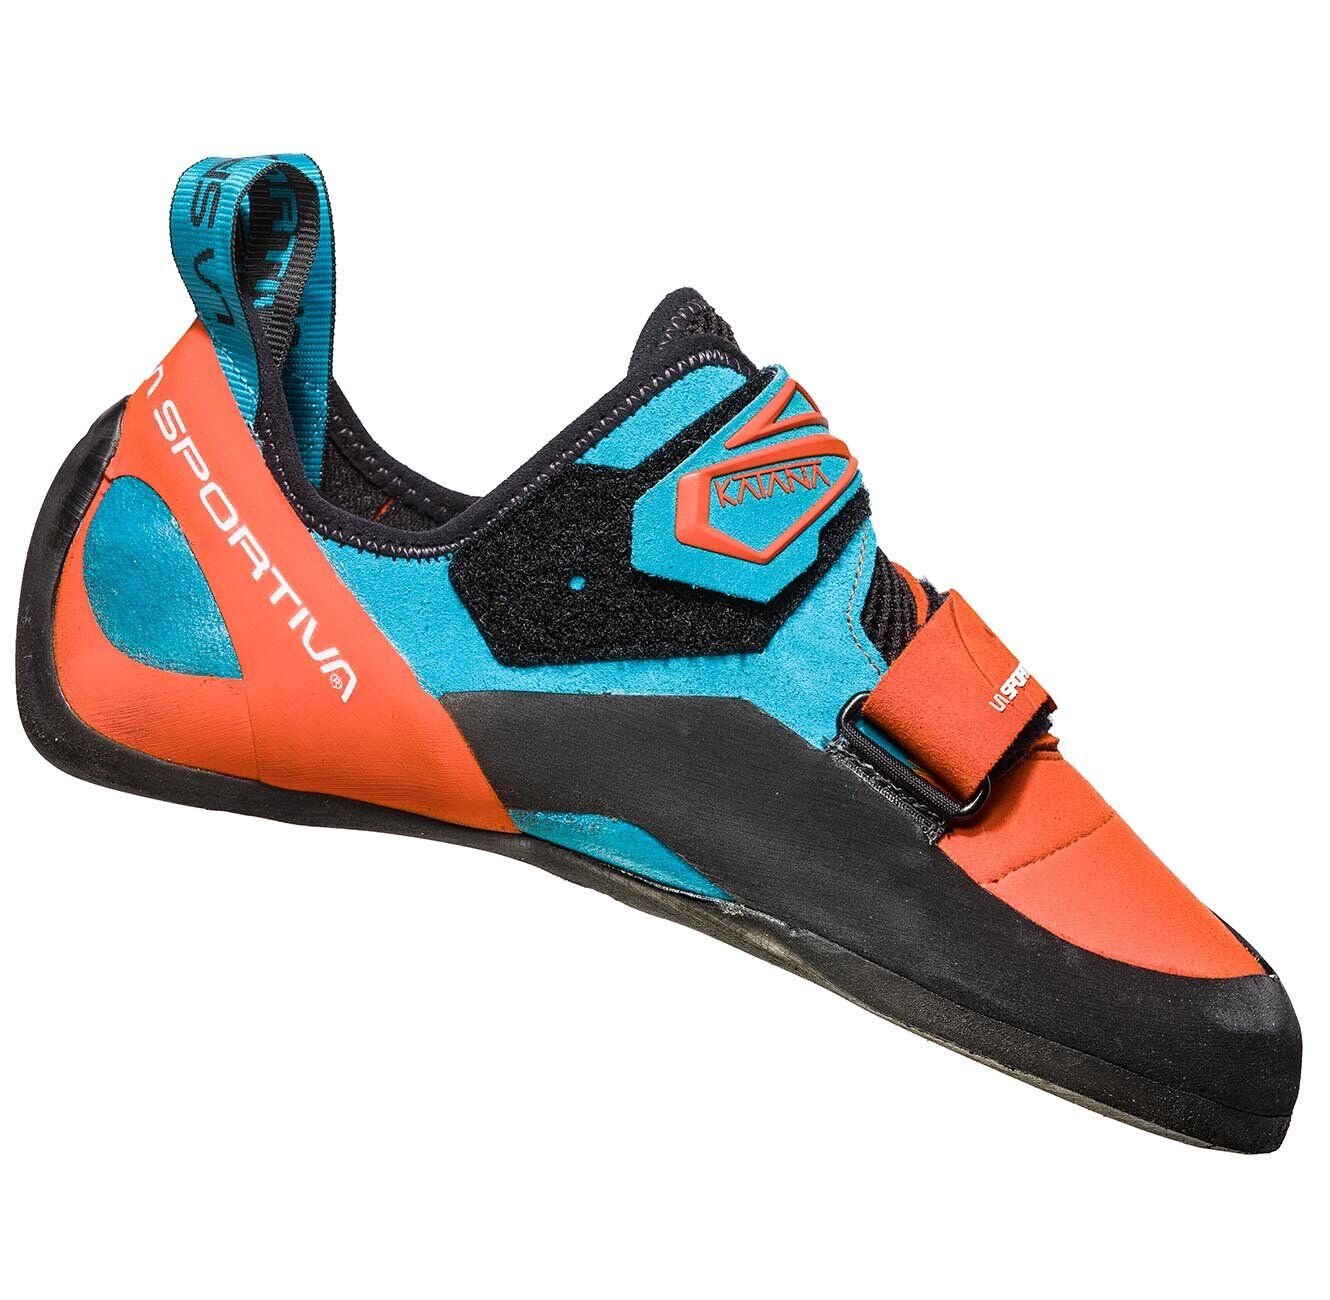 La Sportiva - Katana - Climbing shoes